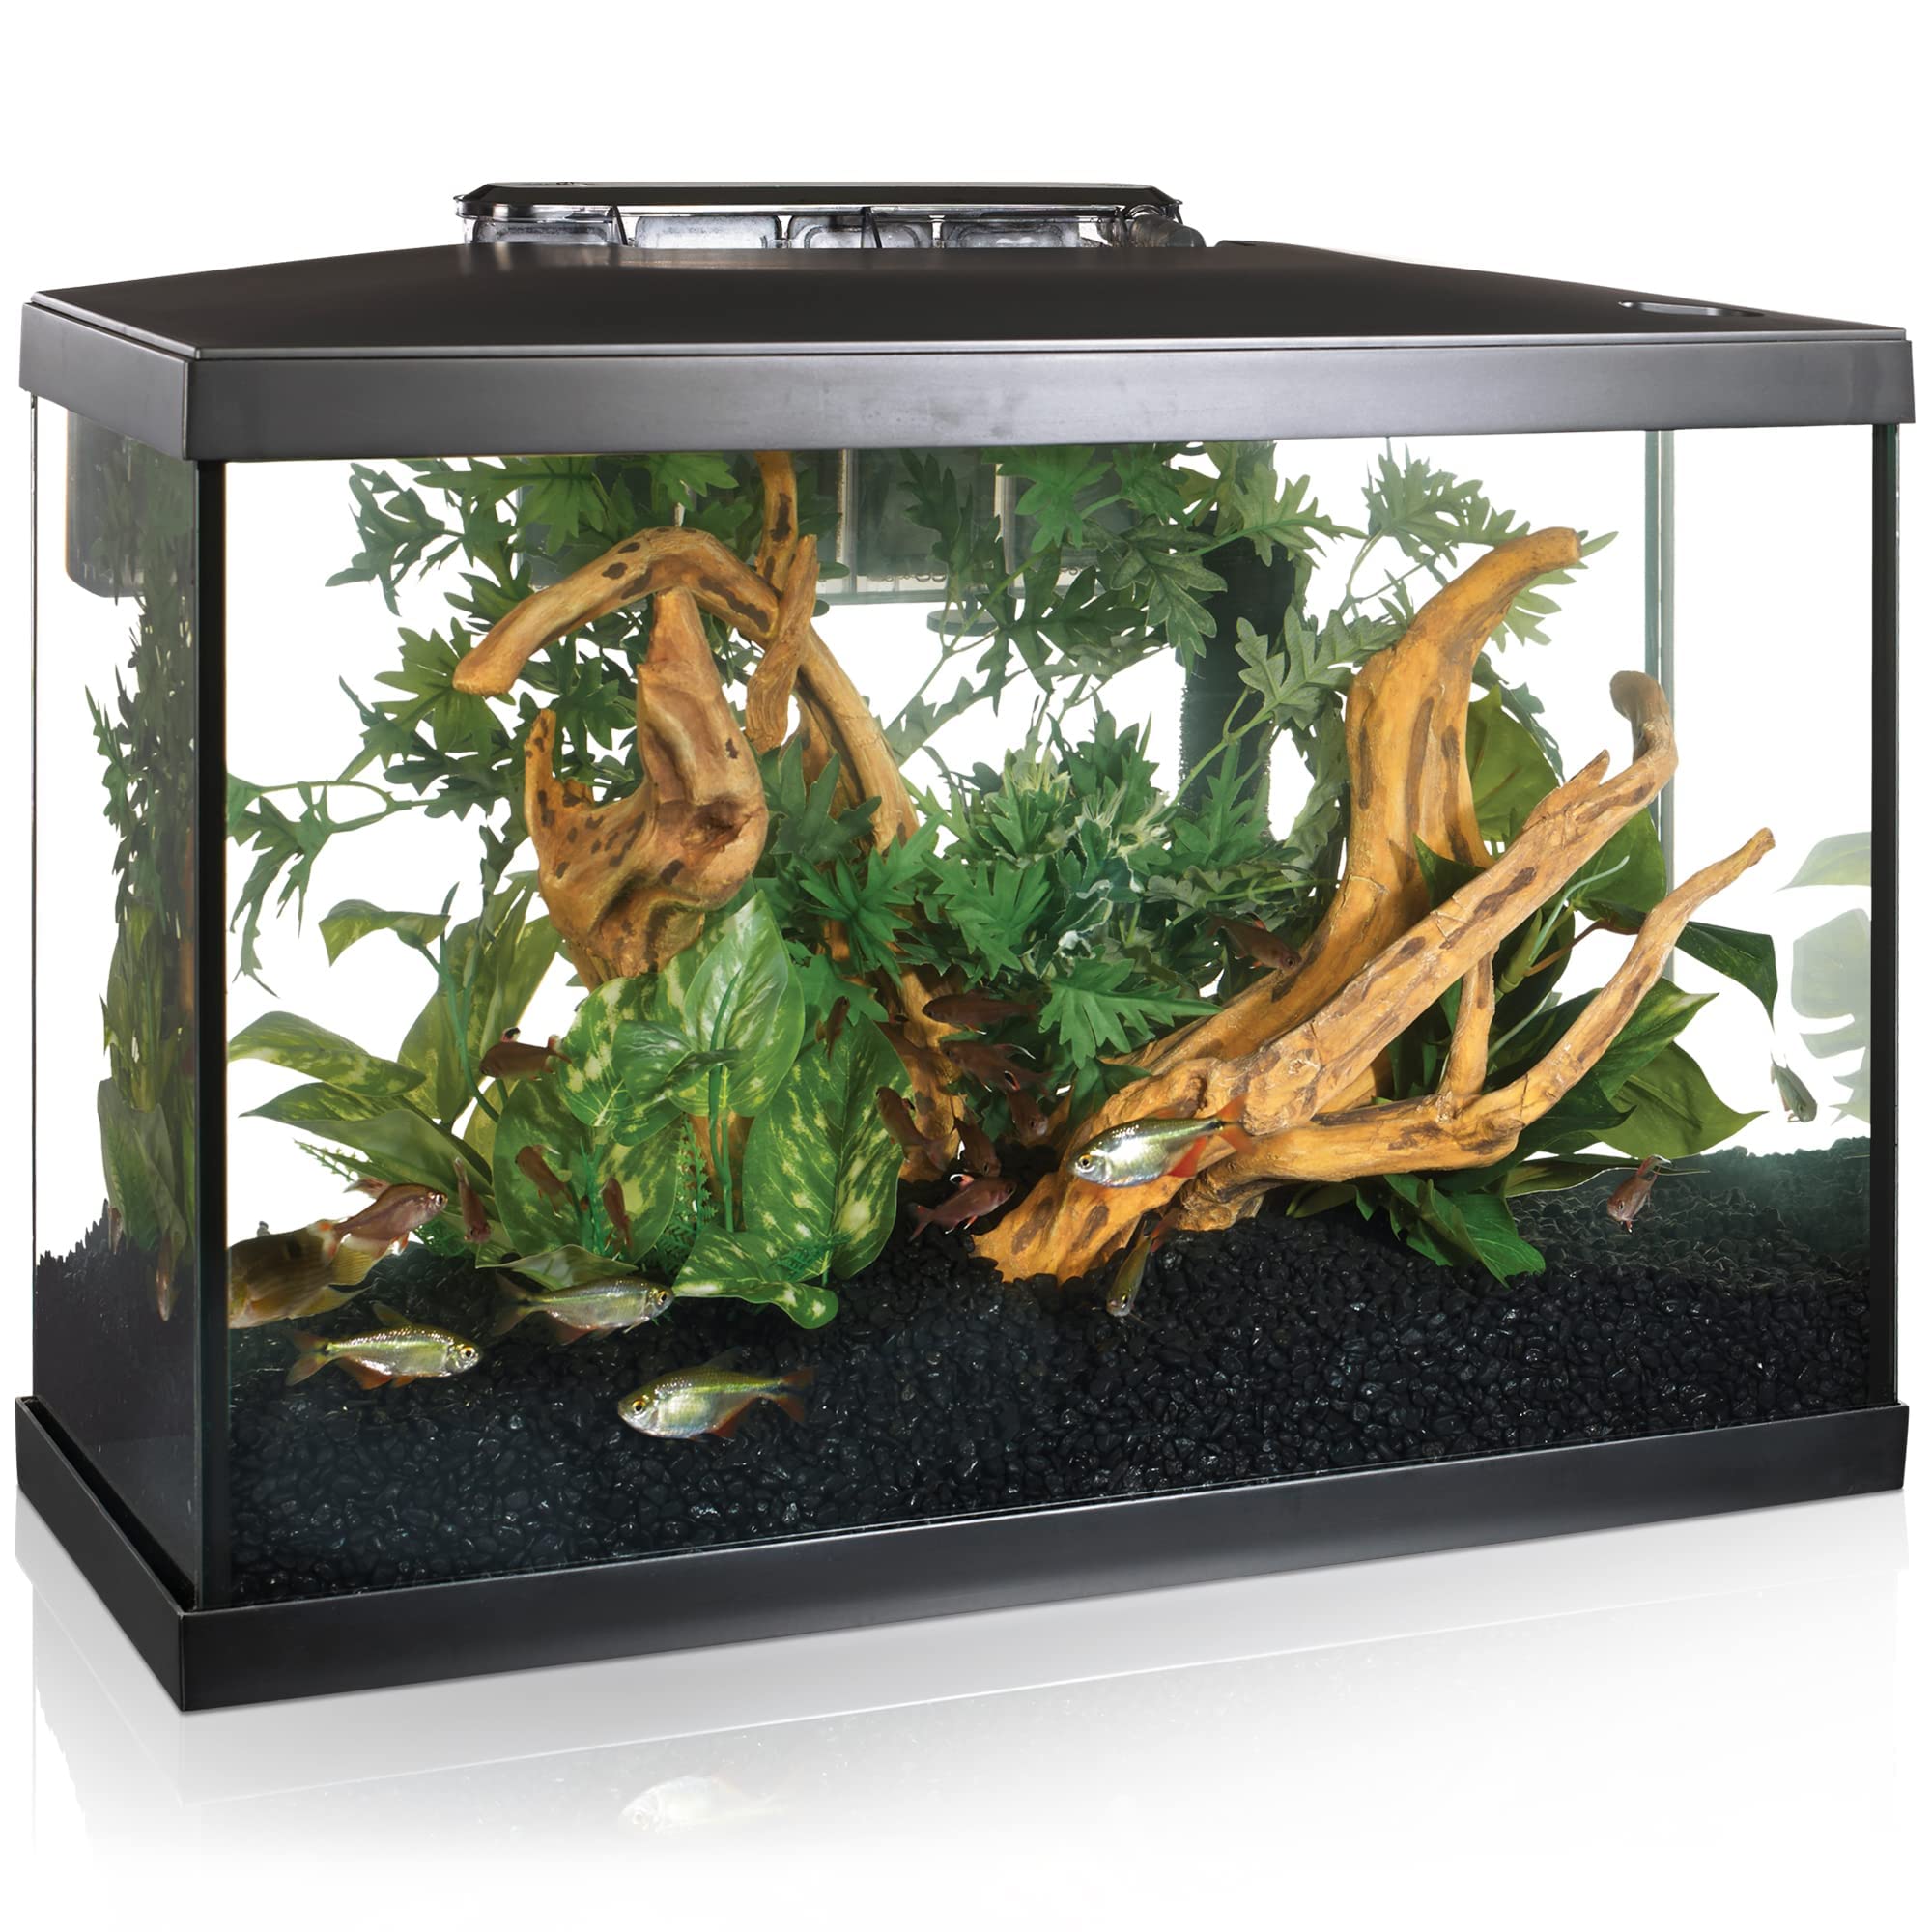 Marina 5 Gallon LED Aquarium Kit – Perfect for Beginner Aquarists and Fish-Keepers.